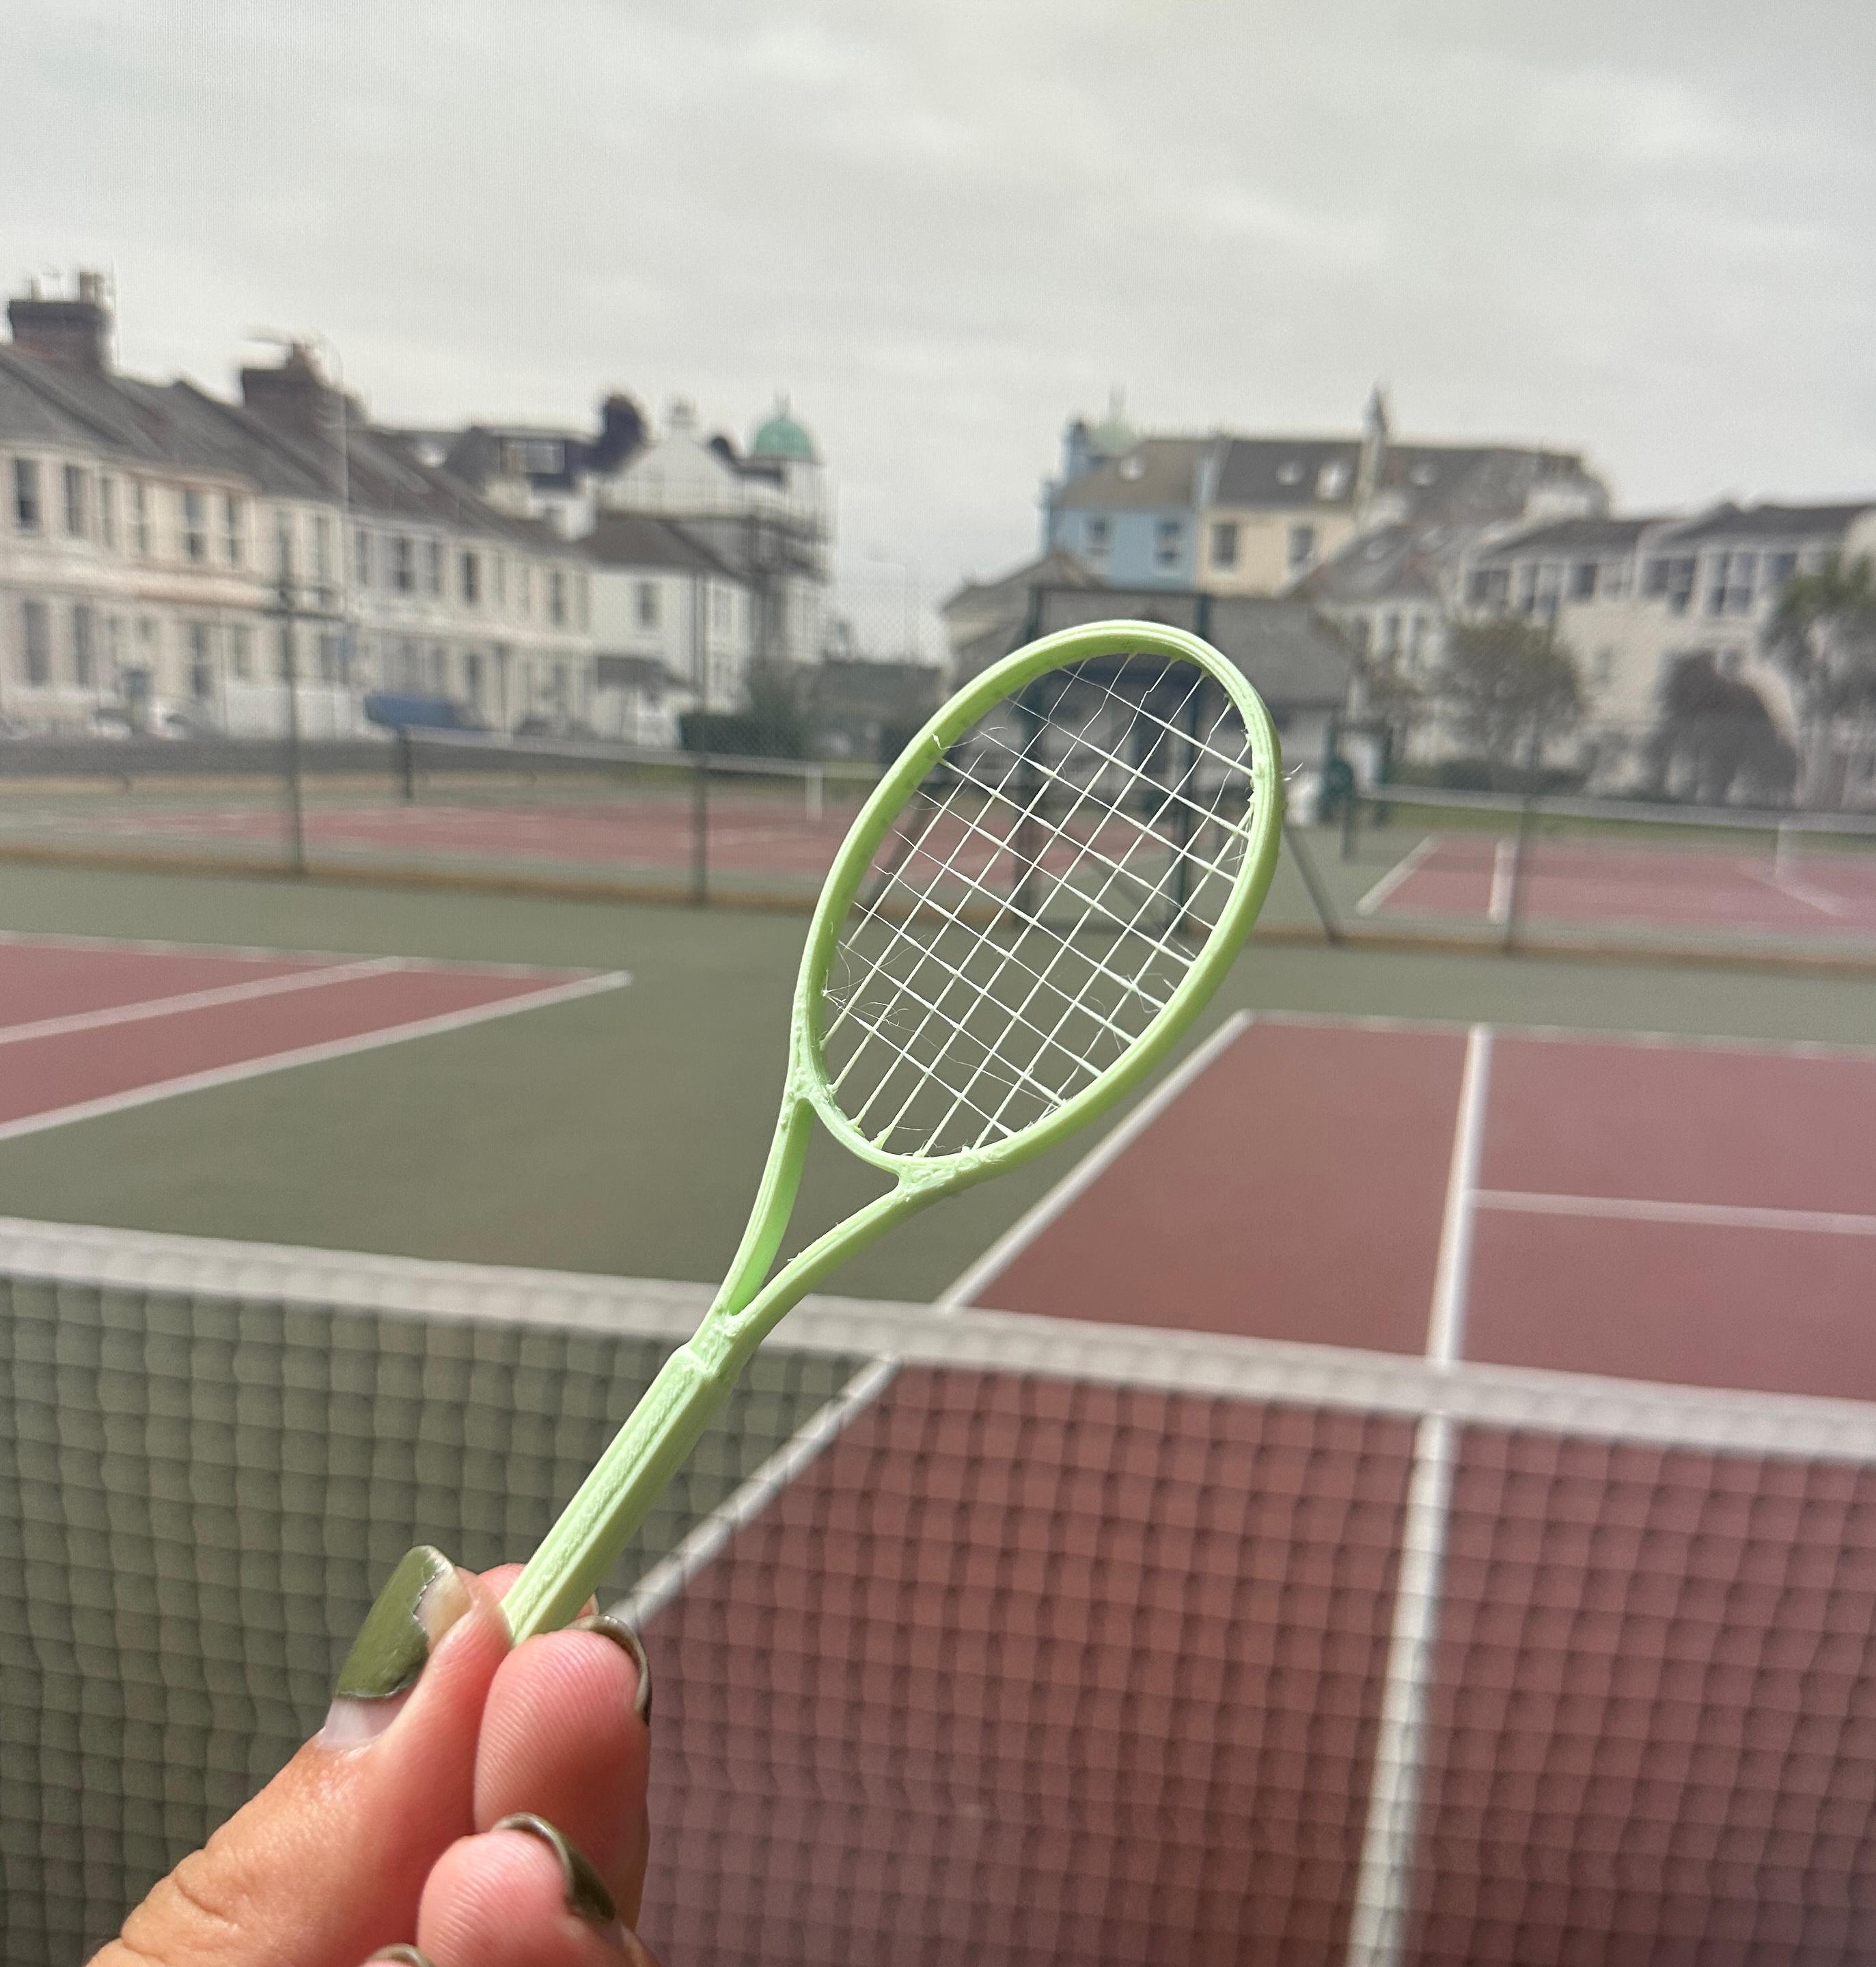 Tennis racket bridge test 3d model